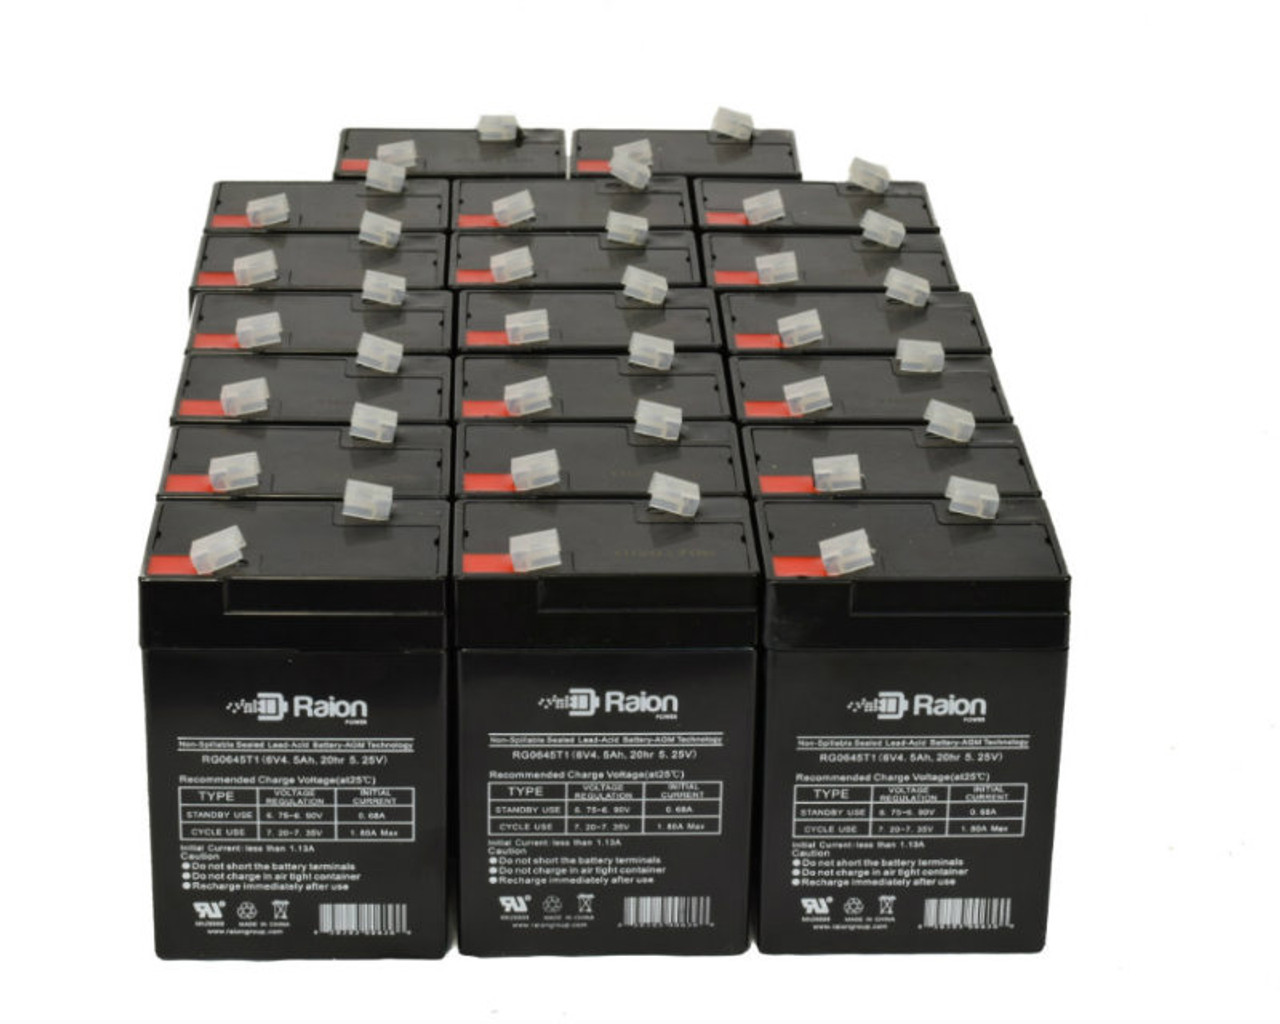 Raion Power 6V 4.5Ah Replacement Emergency Light Battery for Light Alarms 5E15BL - 20 Pack